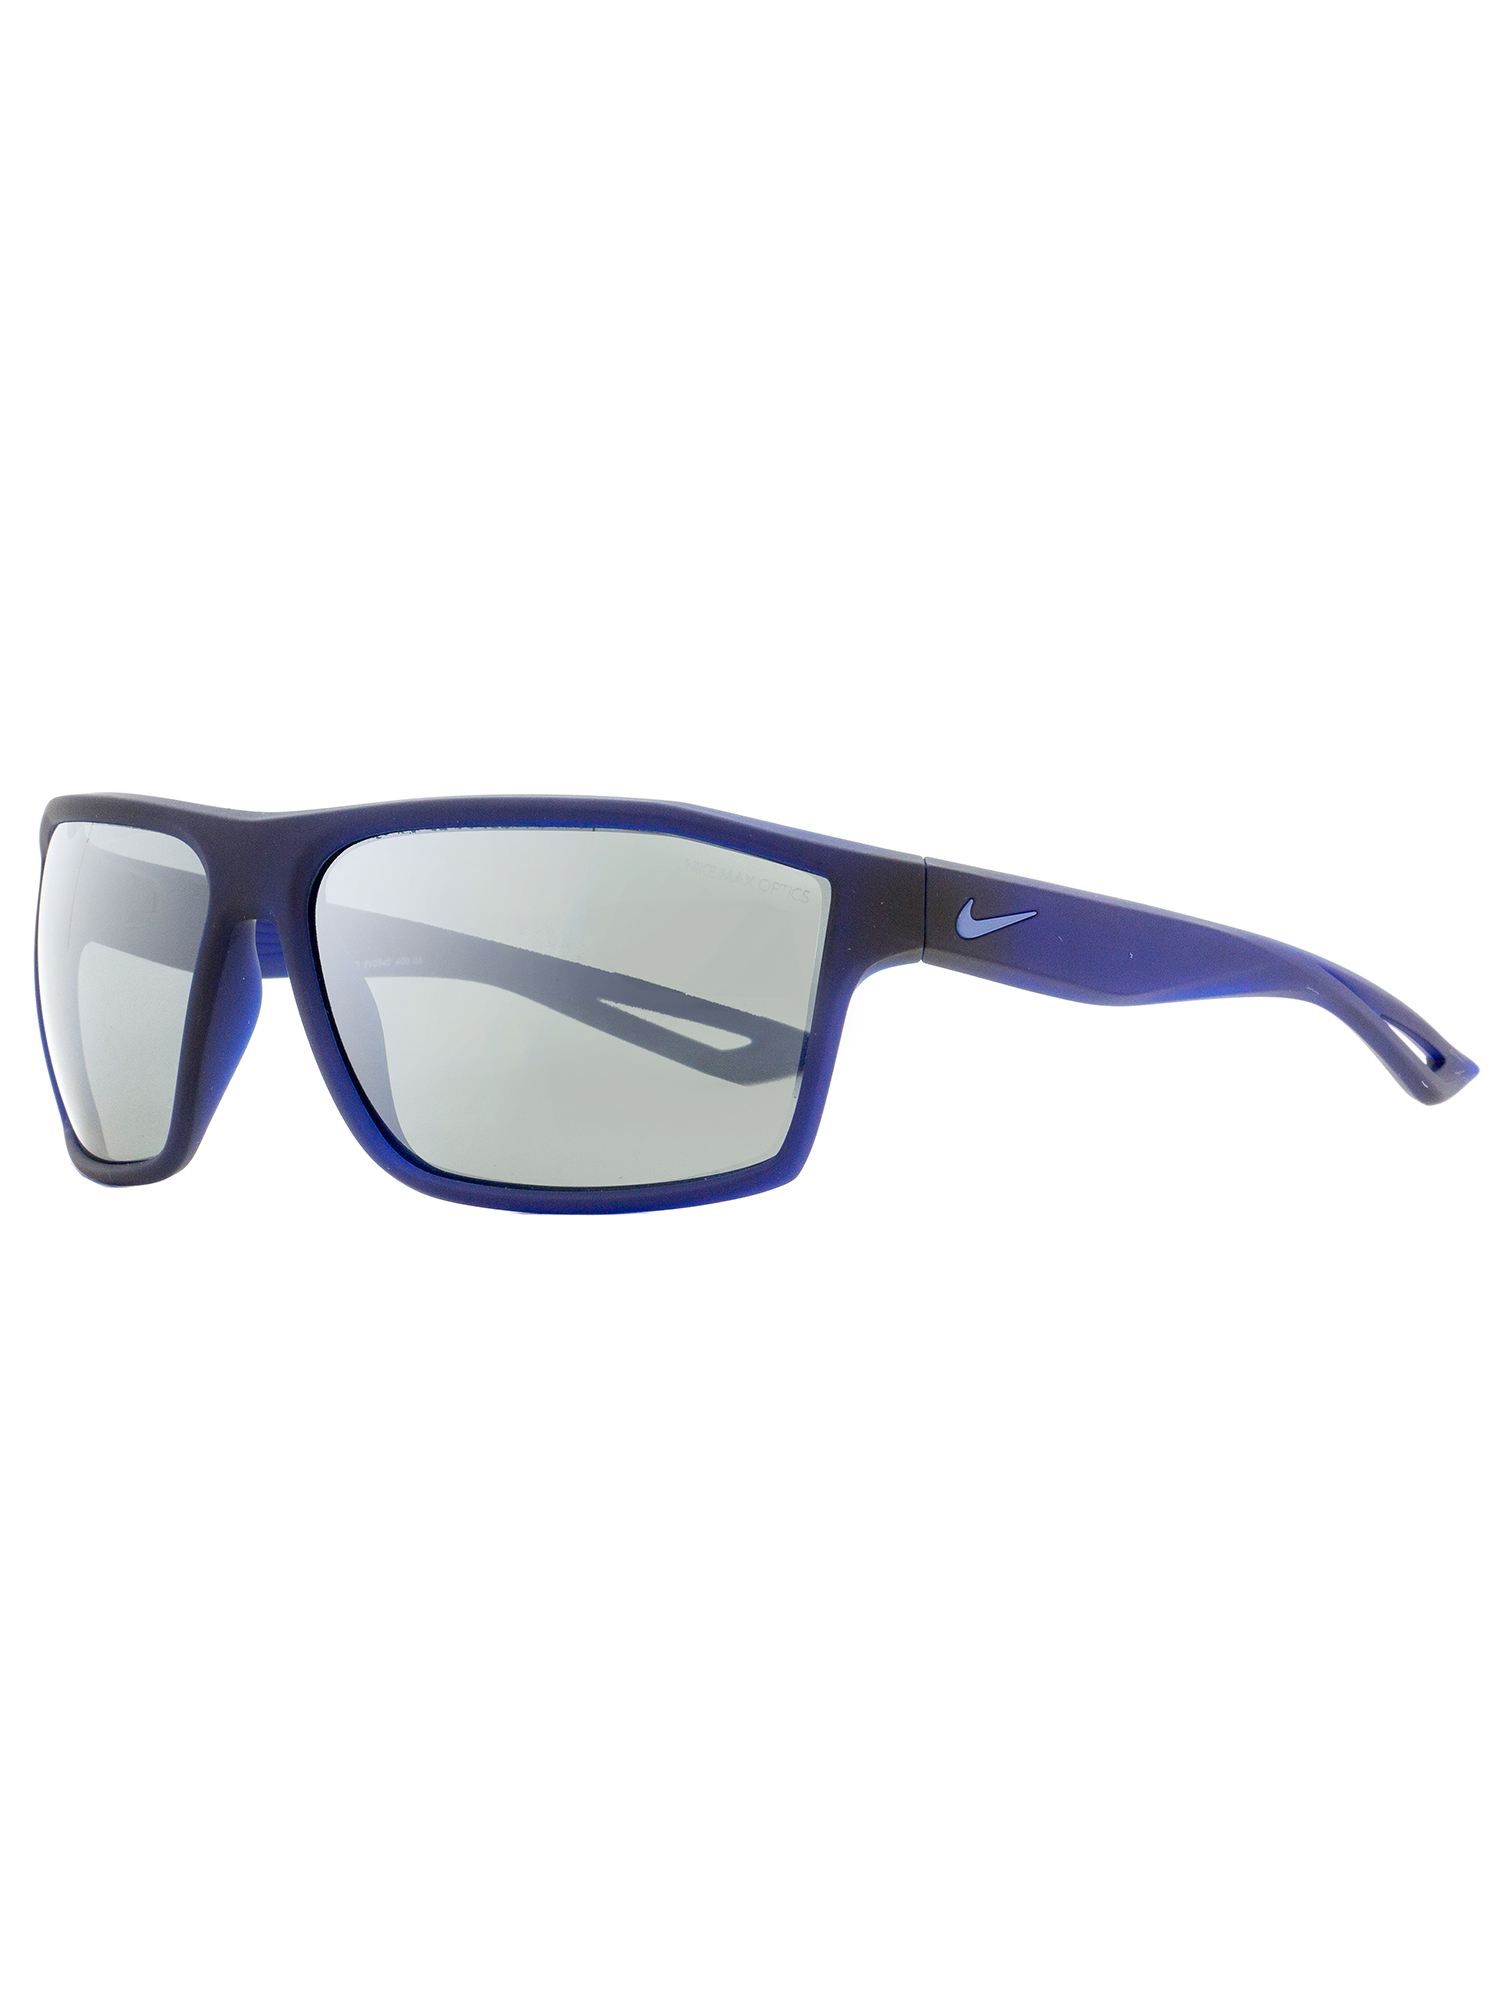 Nike Wrap Sunglasses Legend EV0940 400 Matte Dark Blue 65mm - image 1 of 2